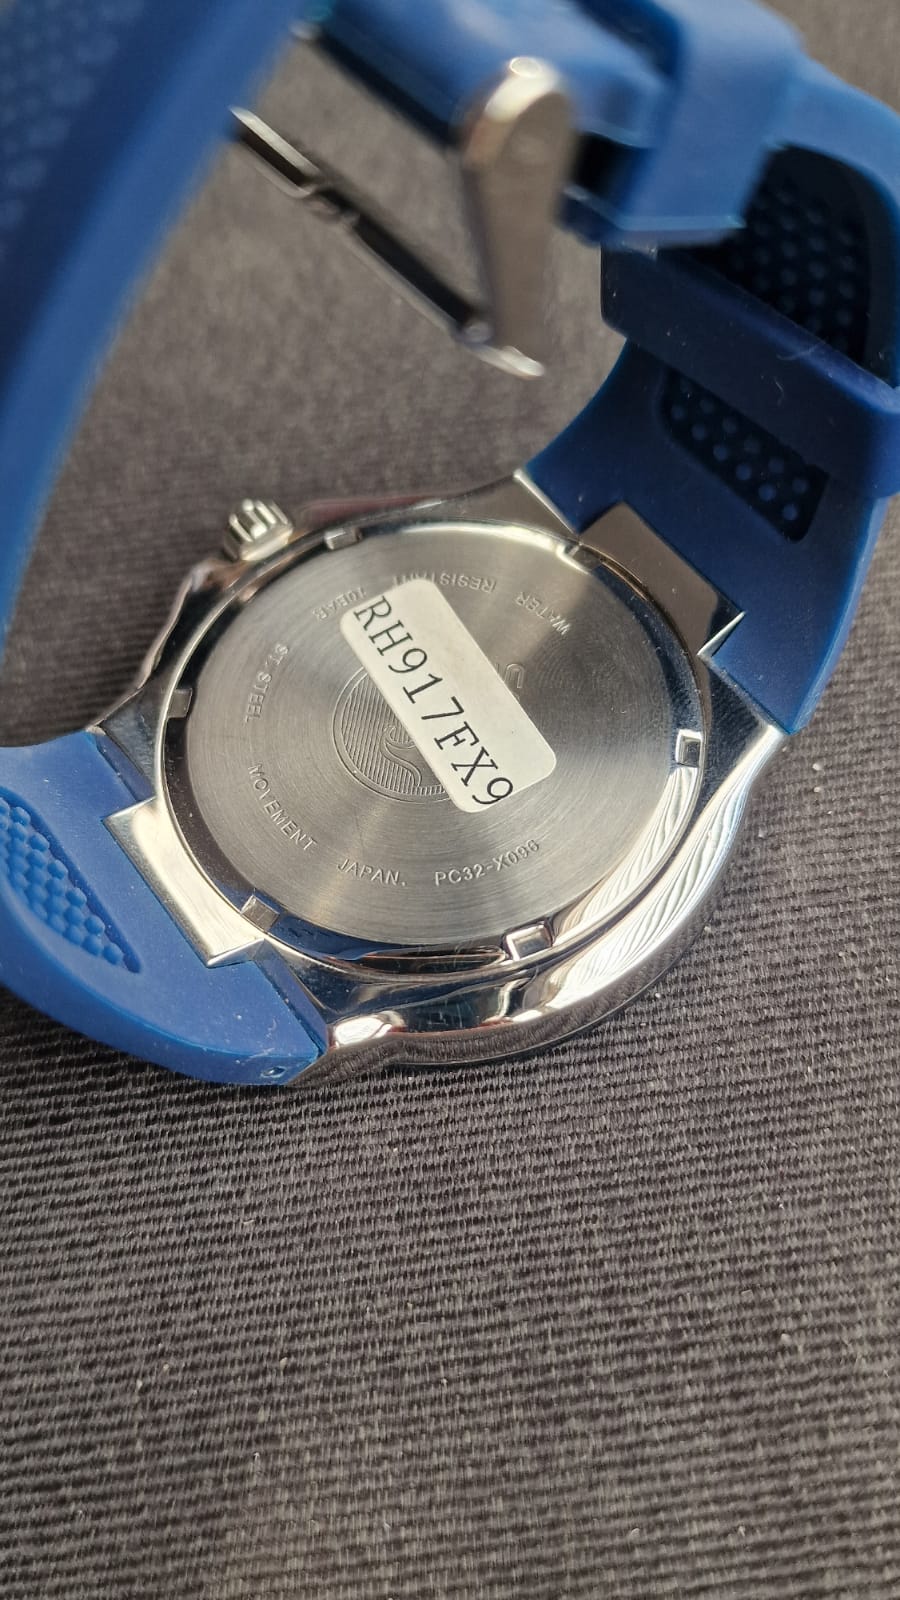 Lorus Sub Brand Of Seiko Gents Watch Blue bezel Blue strap